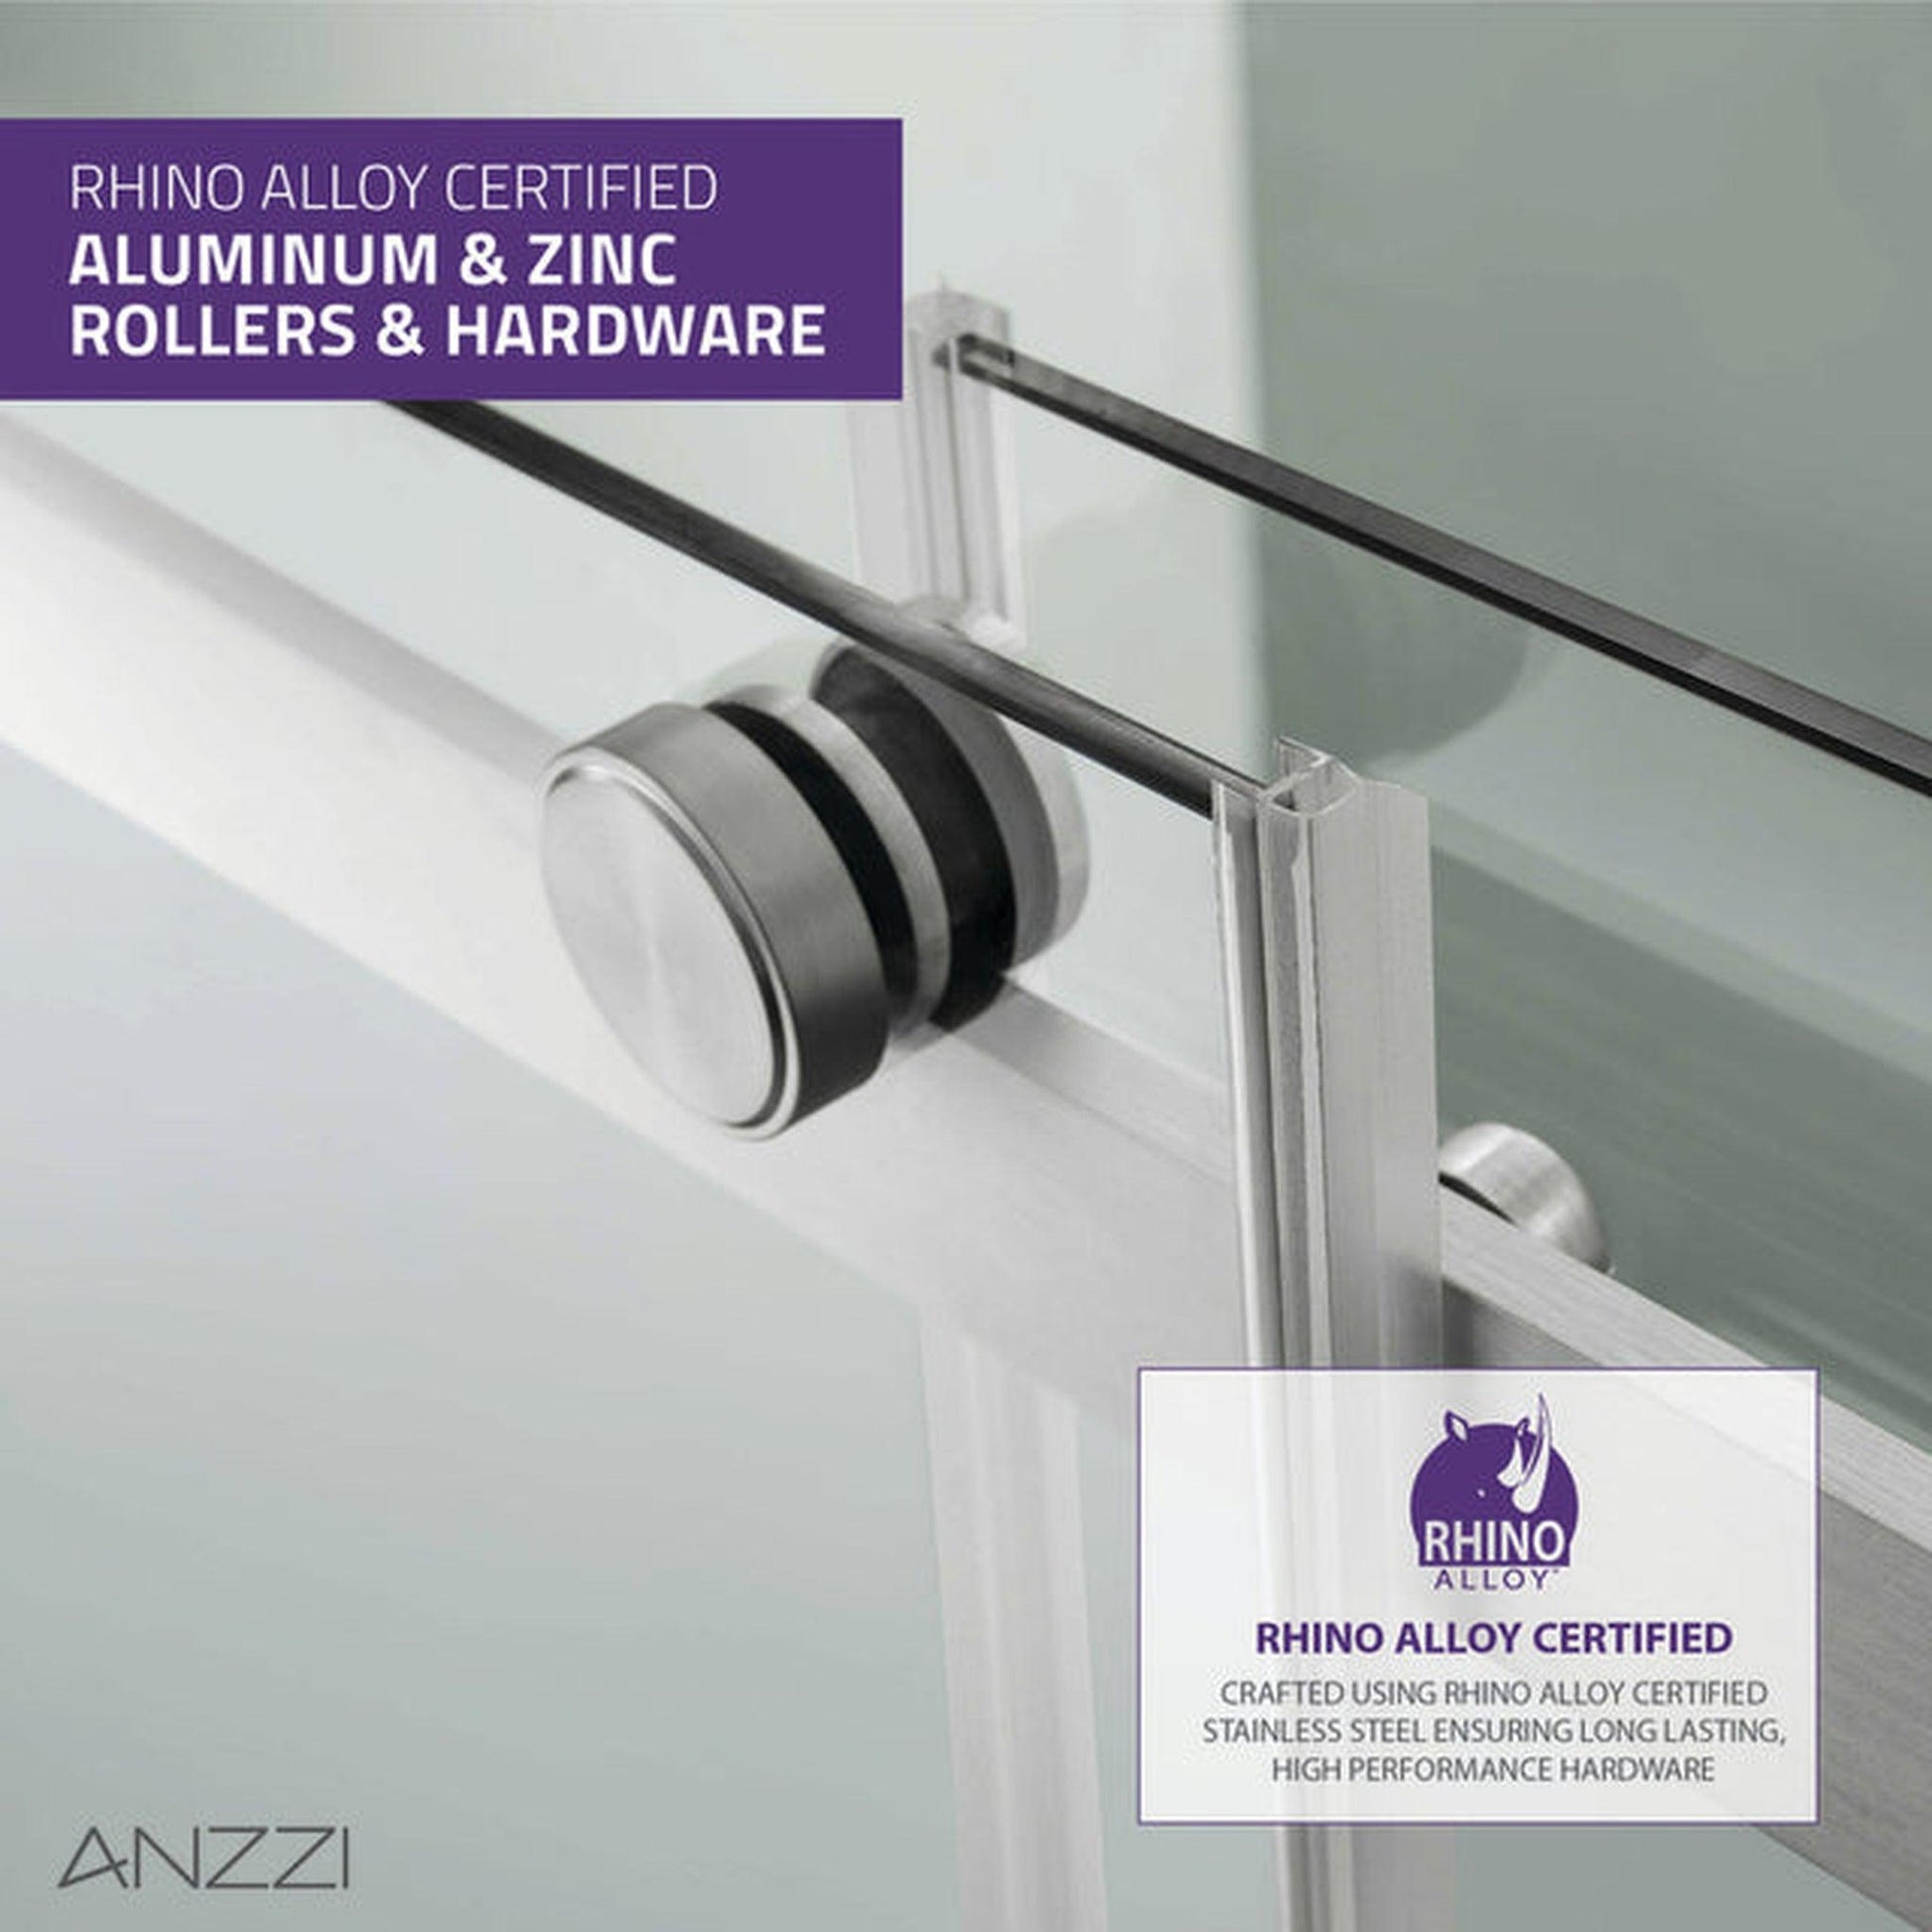 ANZZI Stellar Series 48" x 76" Frameless Rectangular Brushed Nickel Sliding Shower Door With Handle and Tsunami Guard